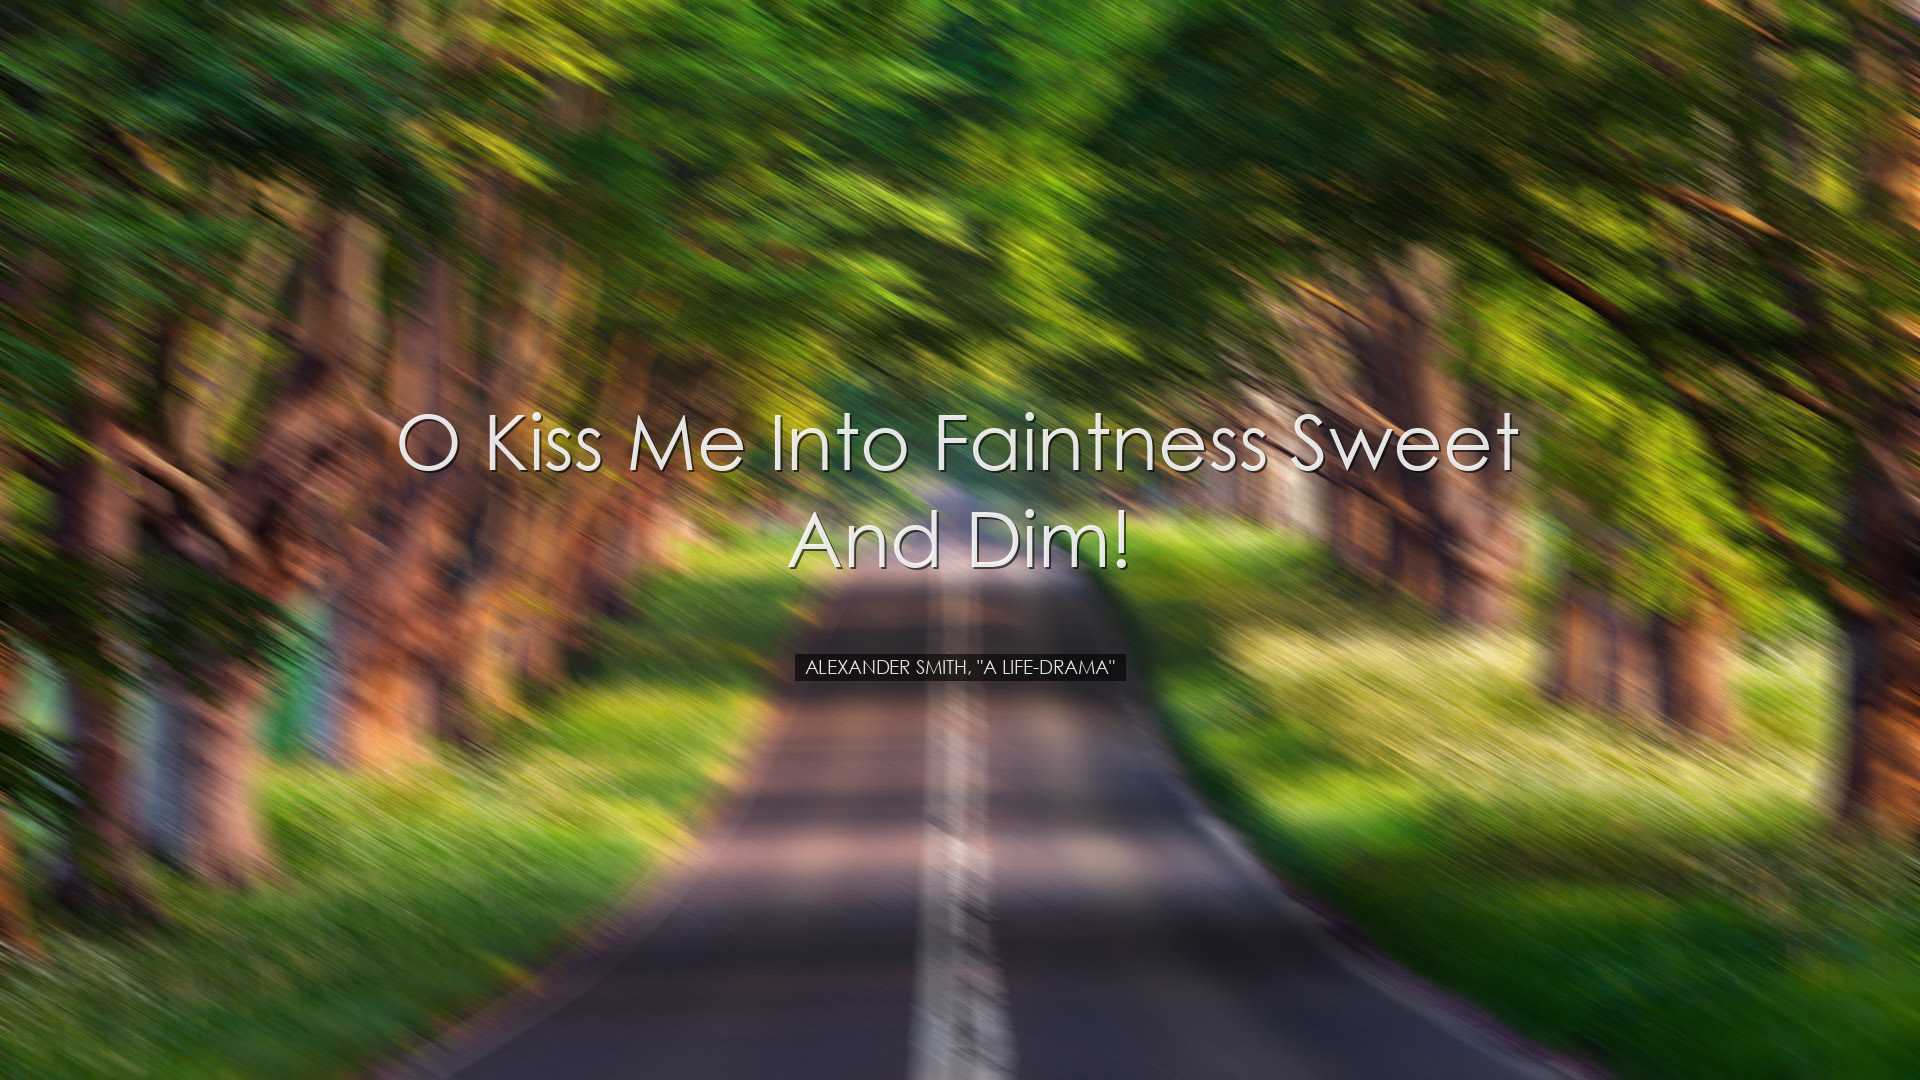 O kiss me into faintness sweet and dim! - Alexander Smith, 